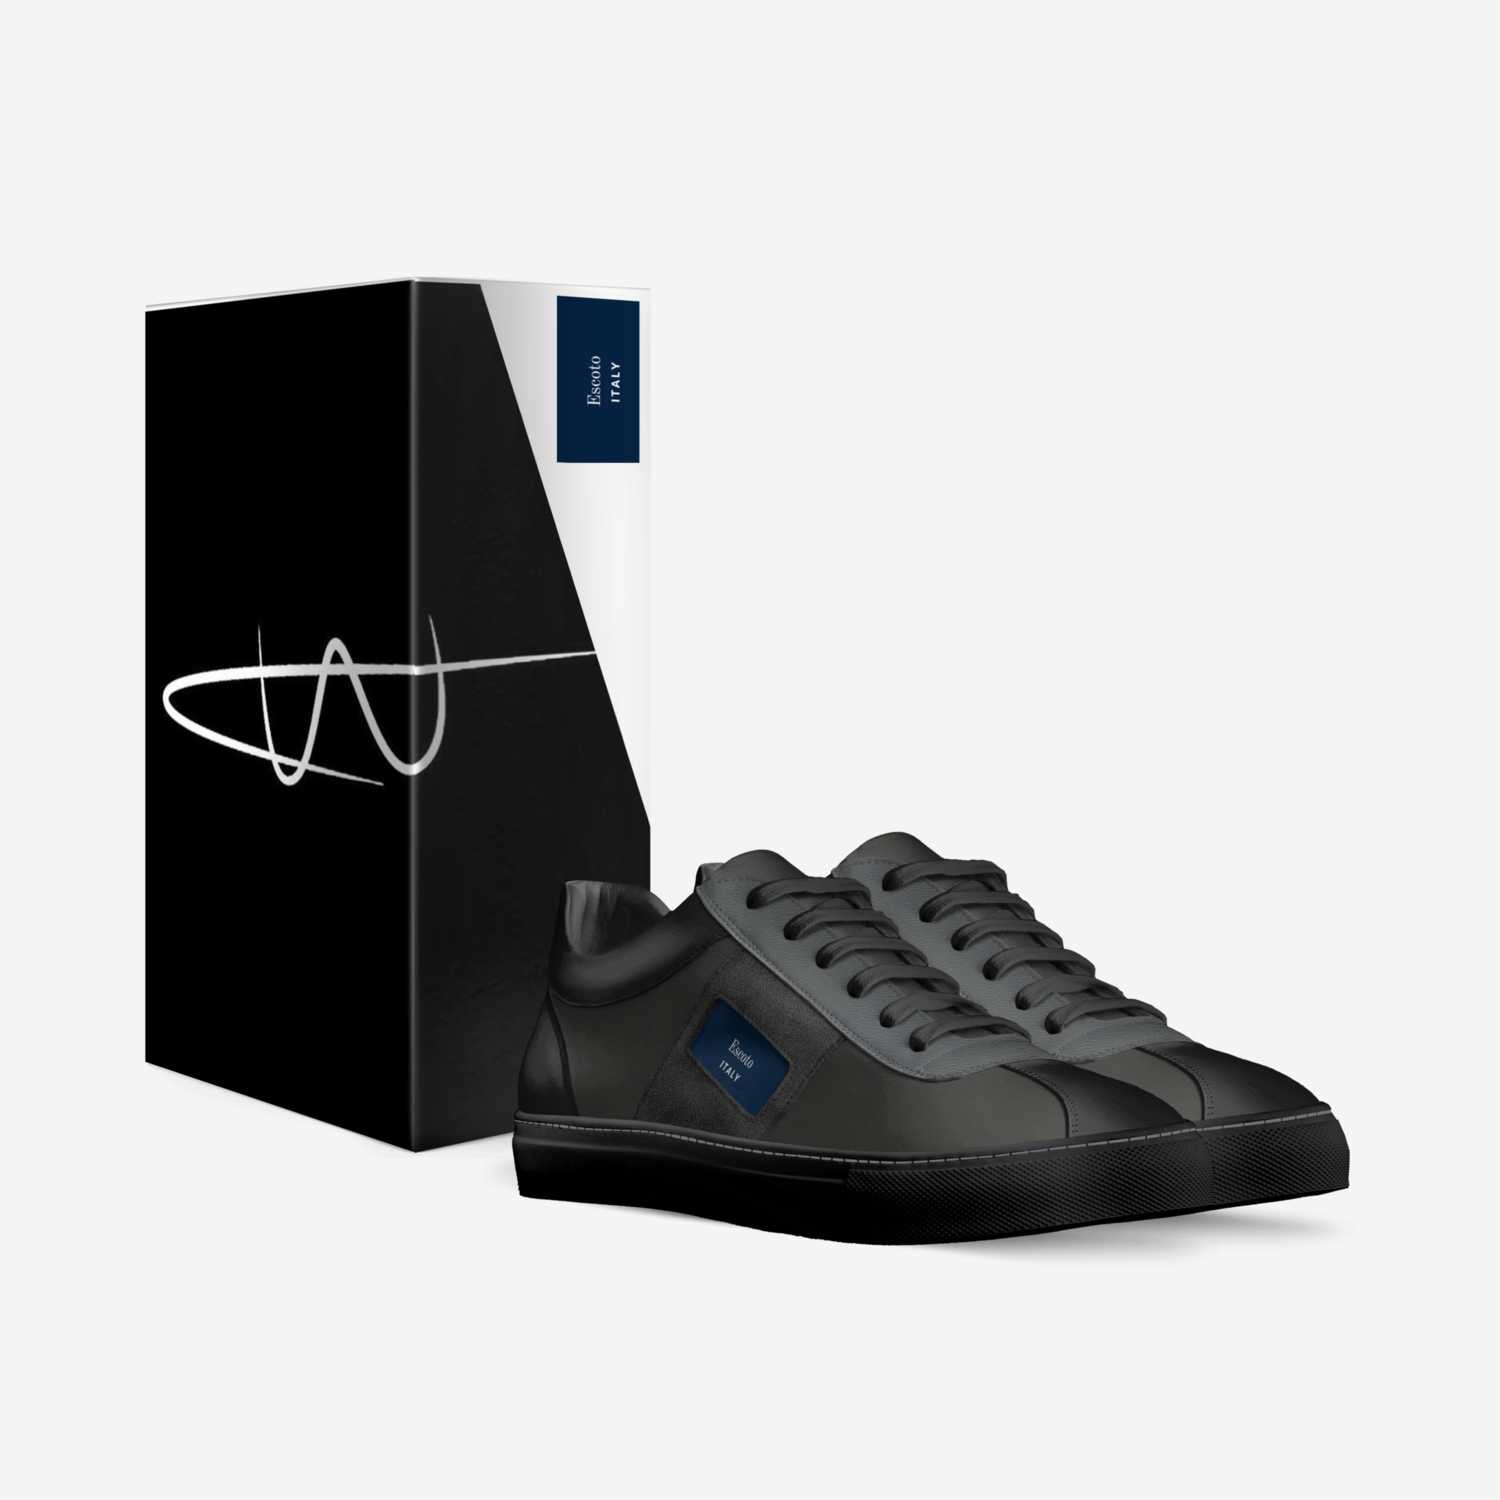 Escoto custom made in Italy shoes by Adrian Escoto | Box view